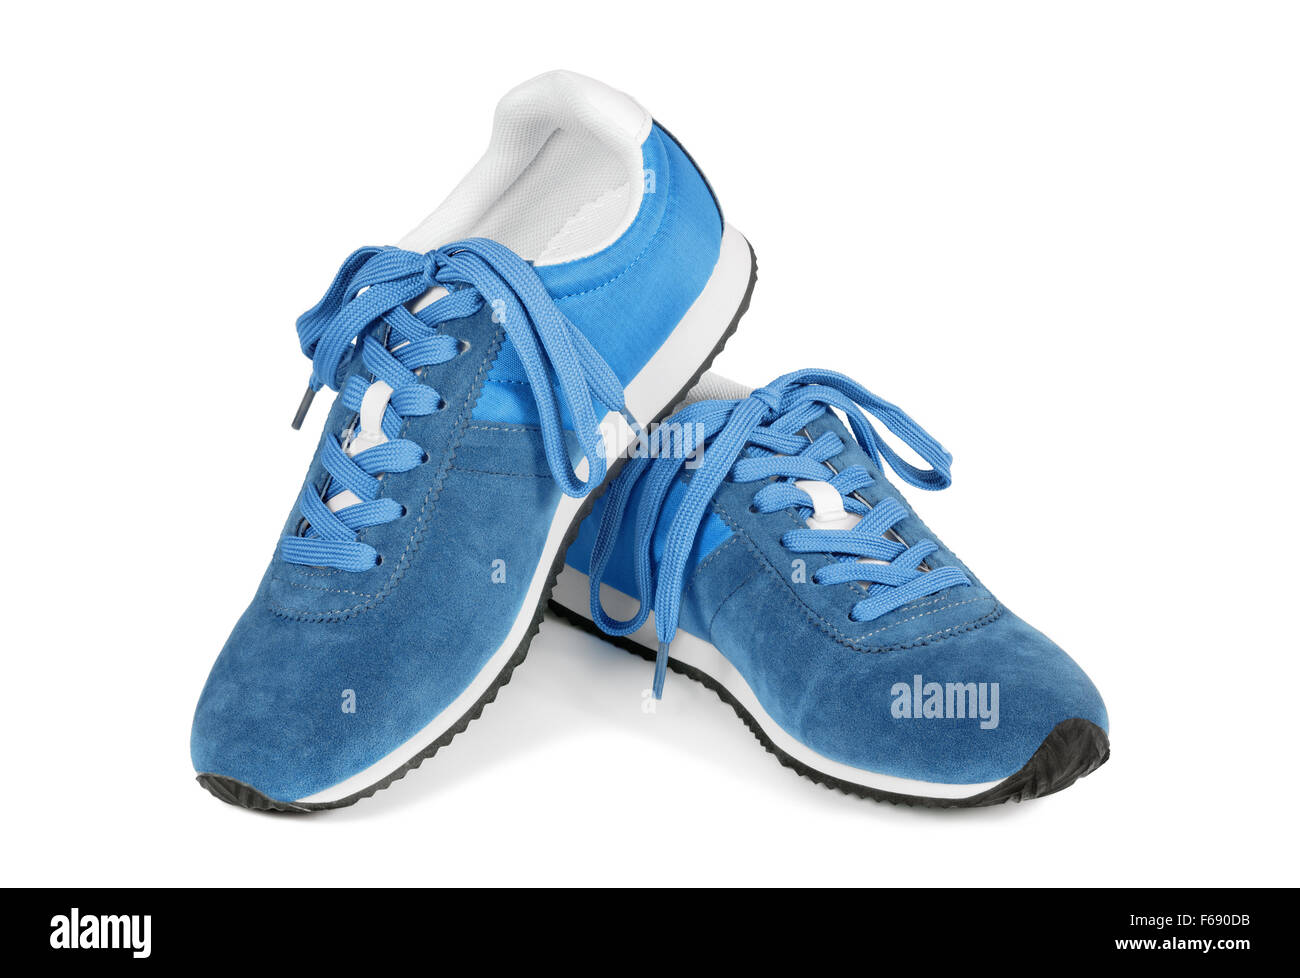 Par de zapatillas azules fotografías e imágenes alta resolución - Alamy